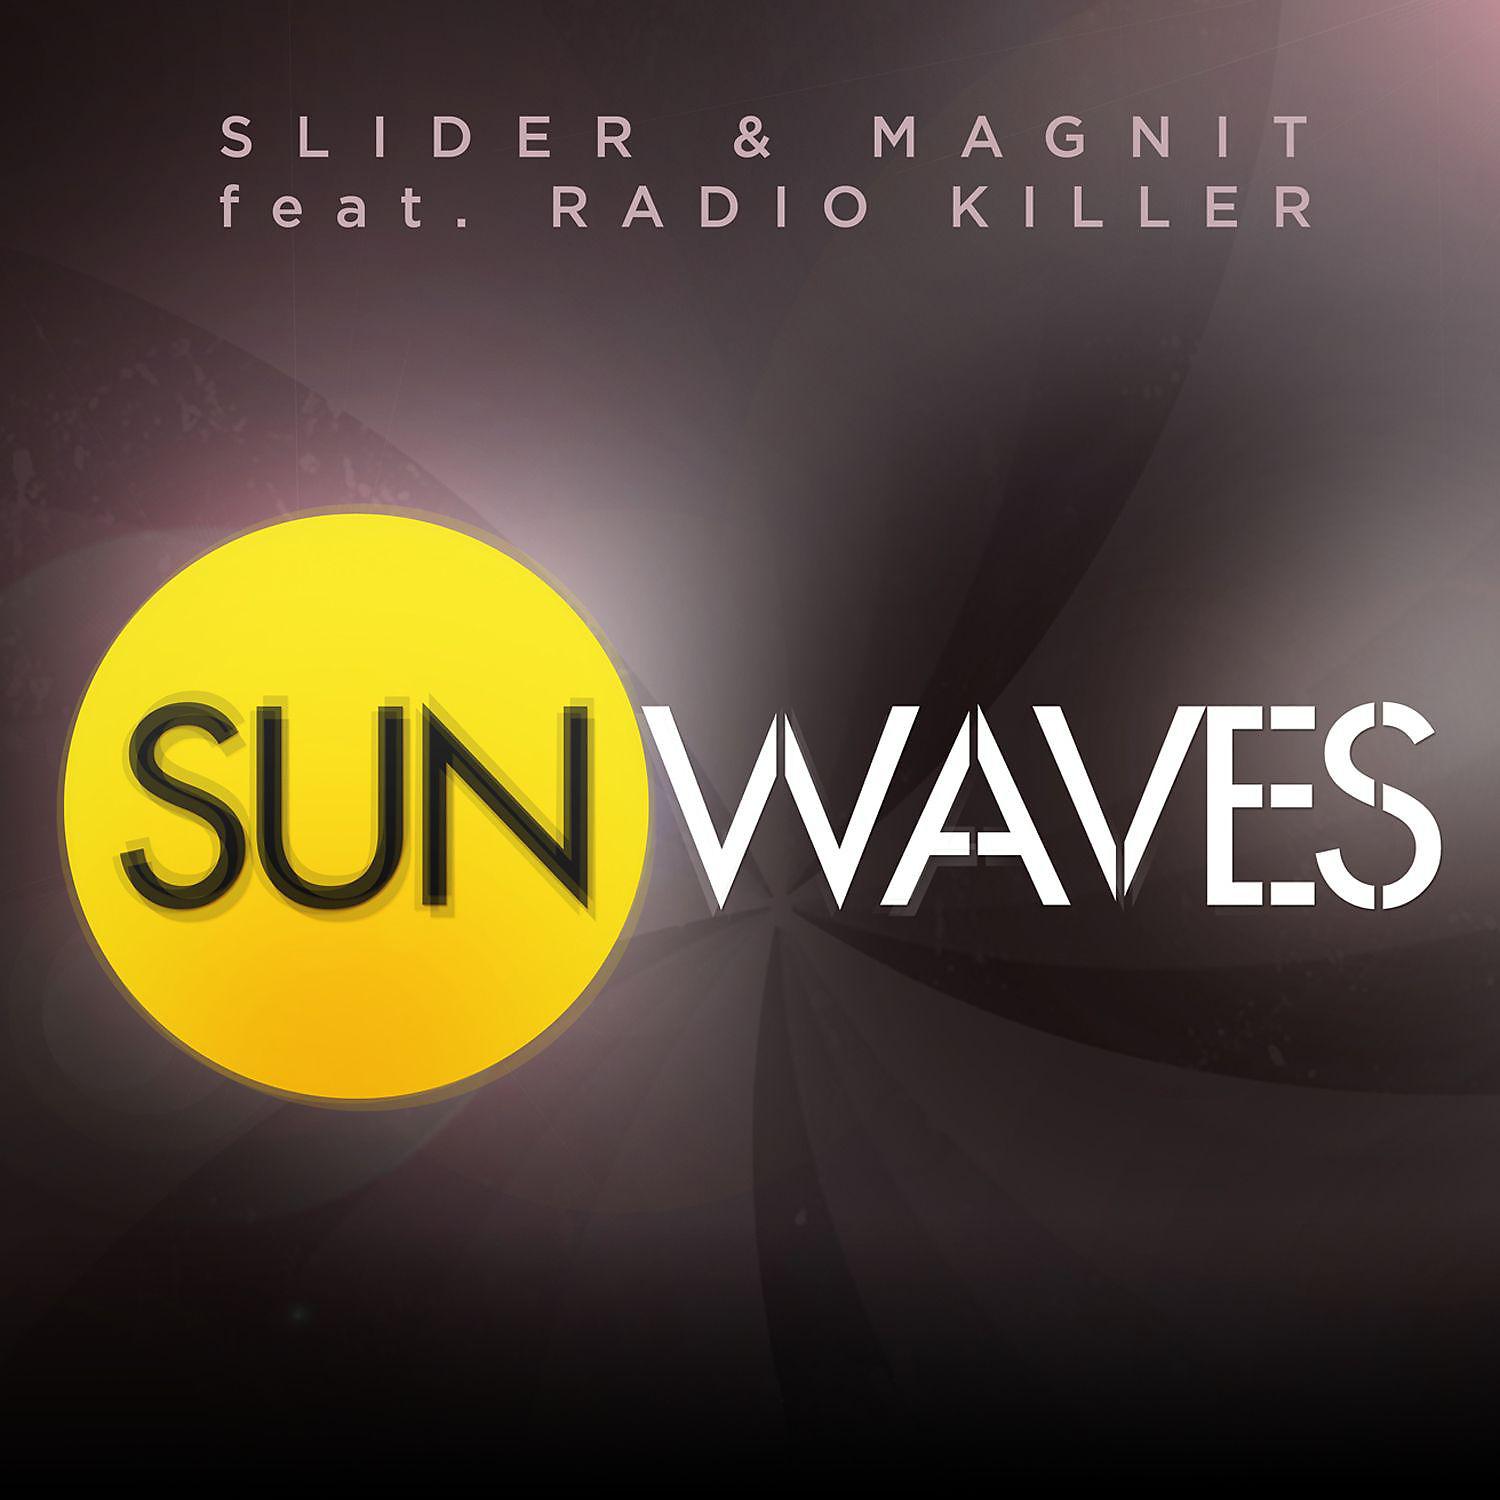 Slider & Magnit, Radio Killer - Sunwaves (feat. Radio Killer) [Club Mix]